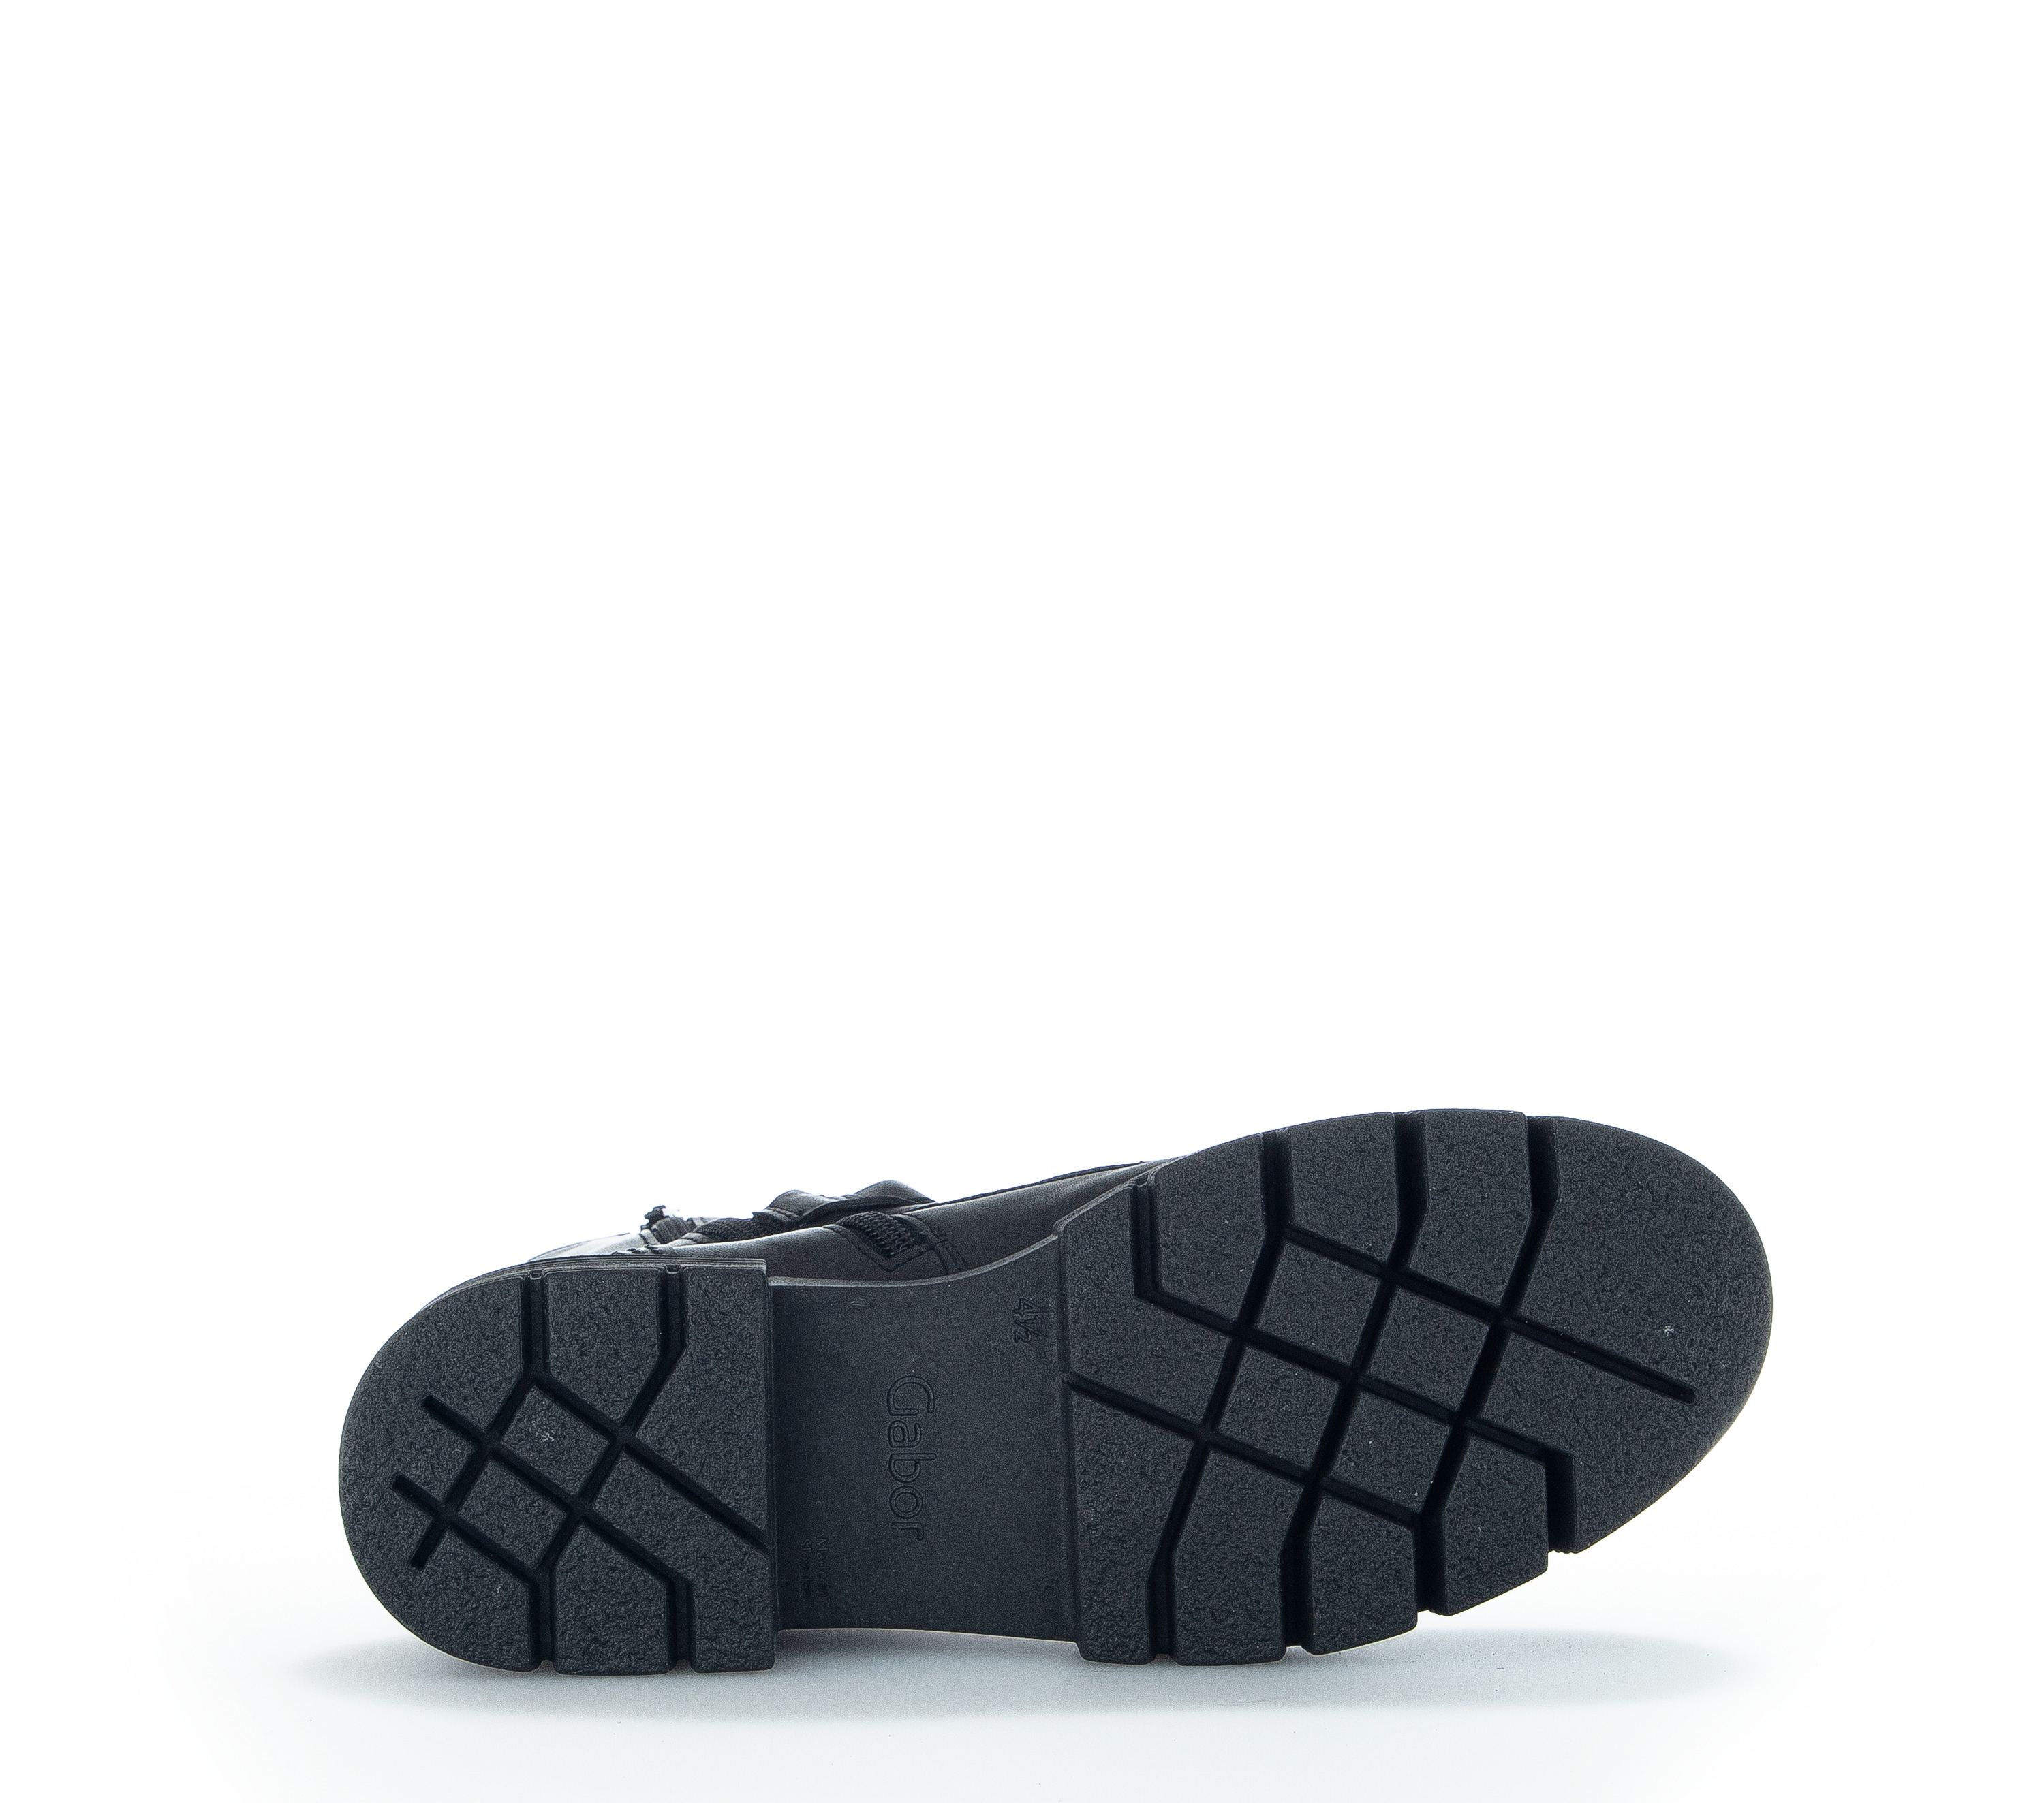 Gabor Shoes Biker-Boot - Black Leather